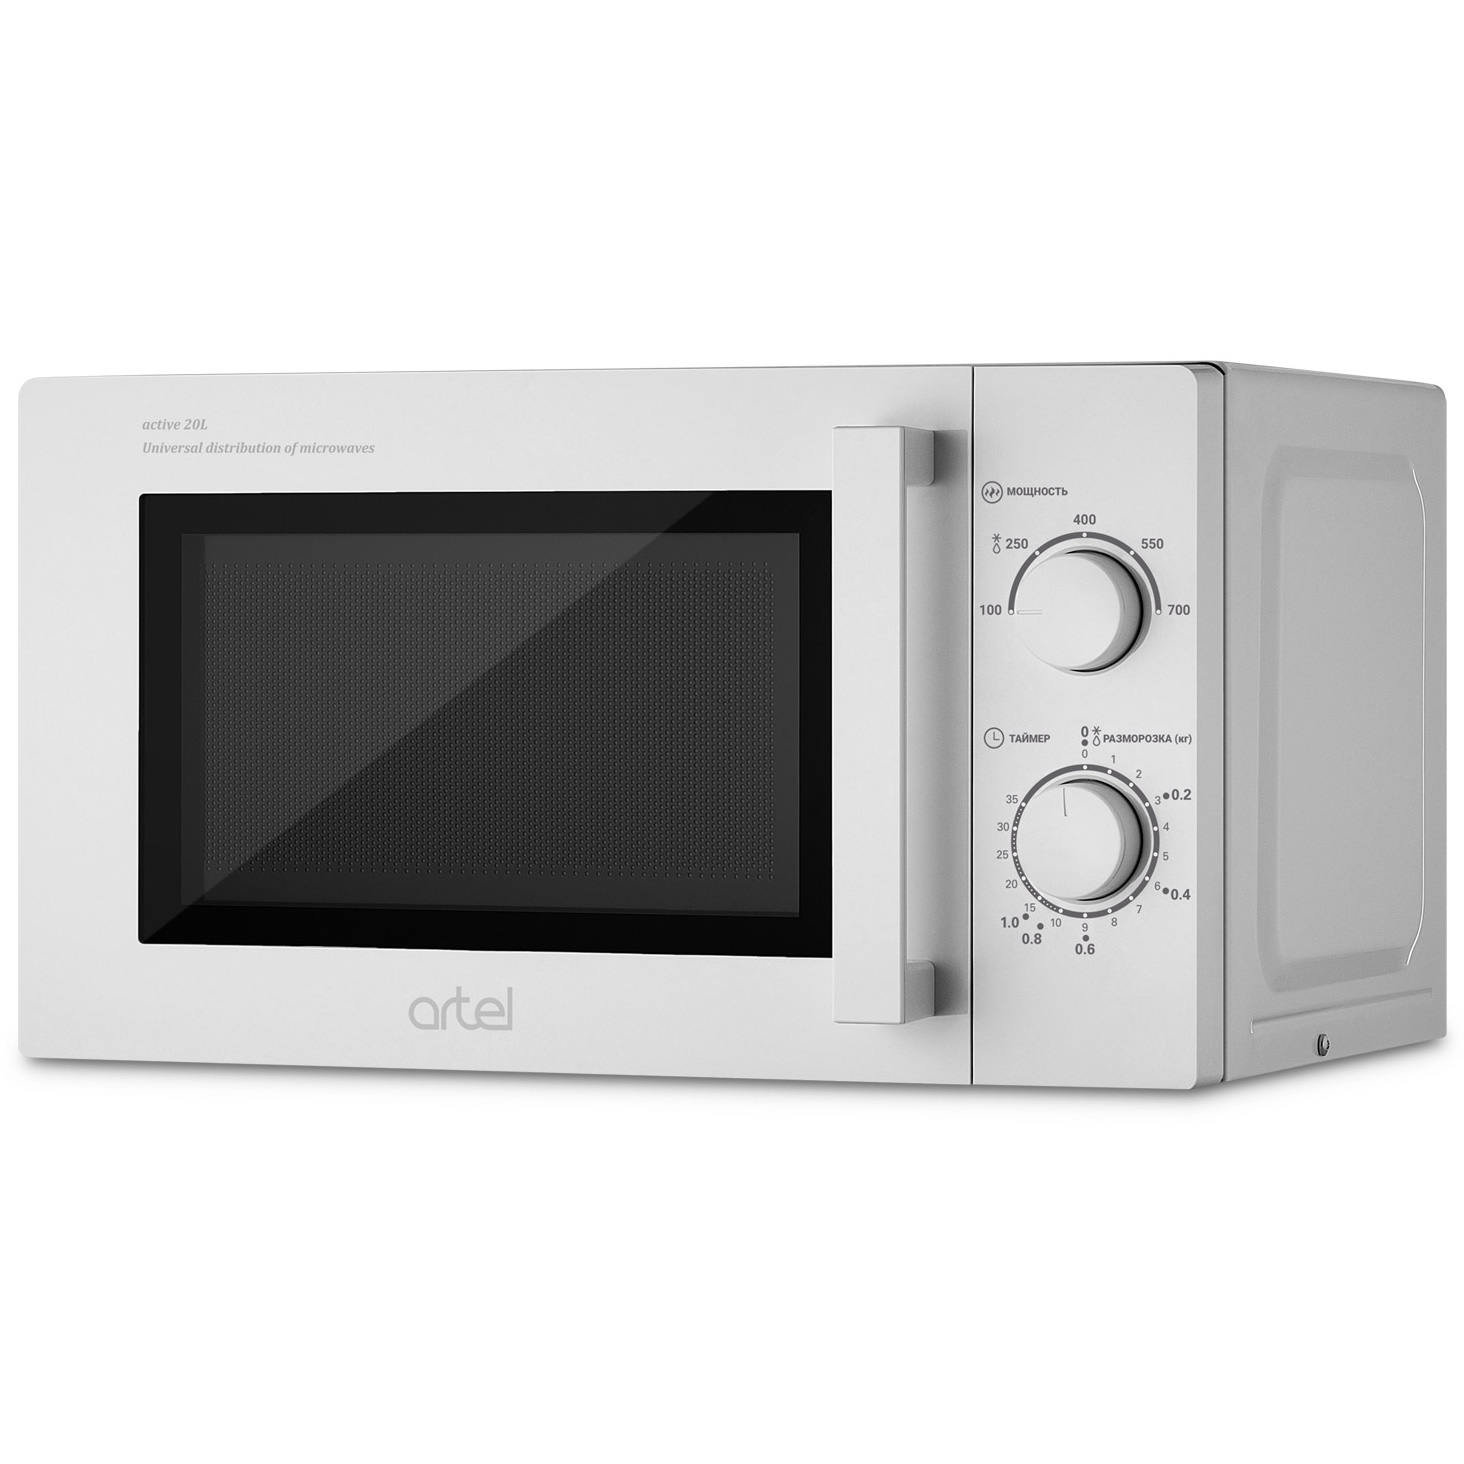 Artel MWM 0120 microwave